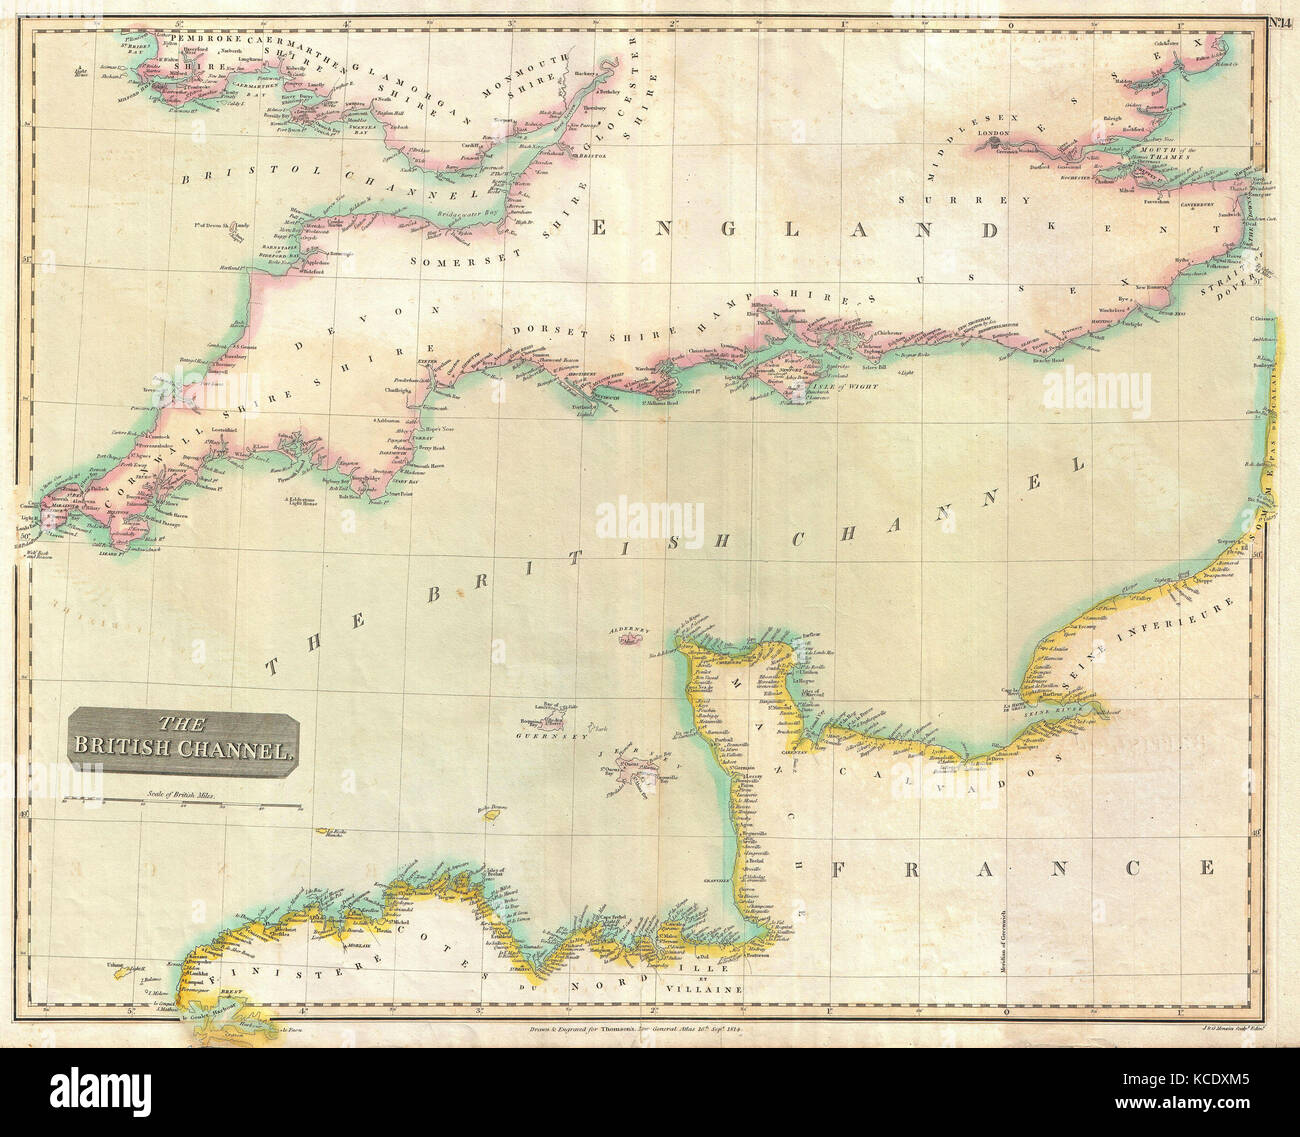 1814-thomson-map-of-the-english-channel-john-thomson-1777-1840-was-KCDXM5.jpg